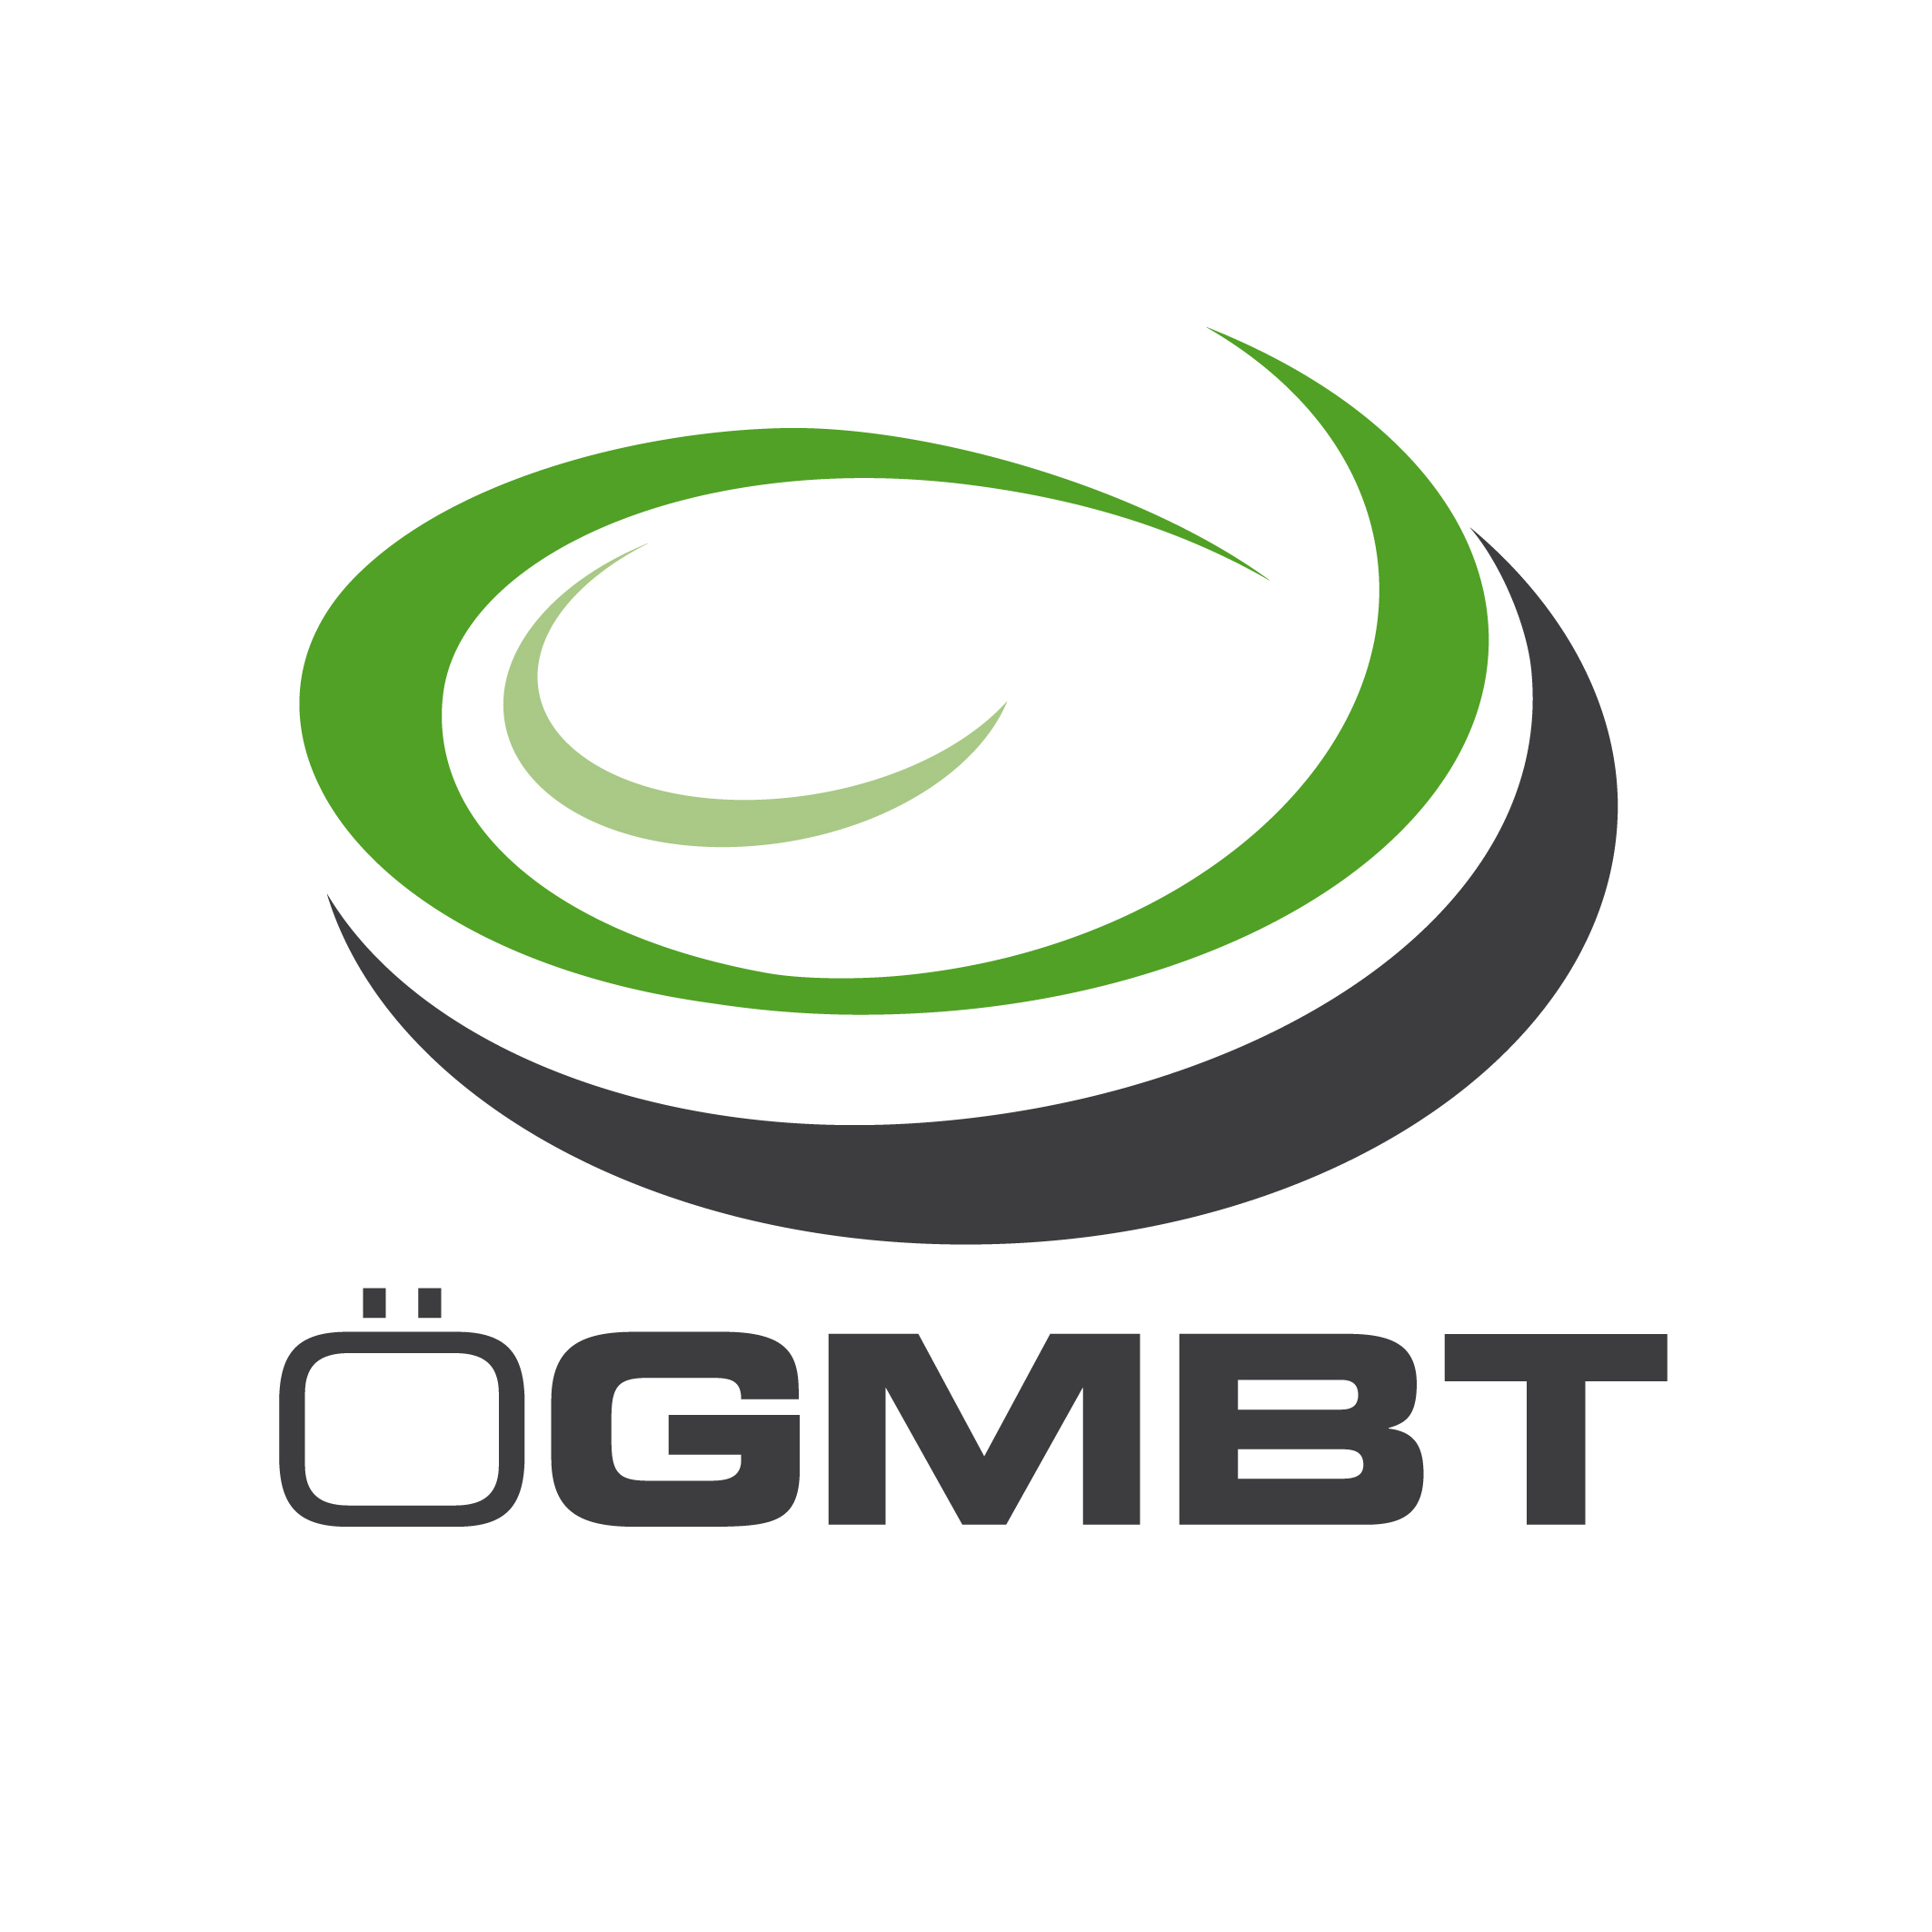 OGBMT RGB.jpg